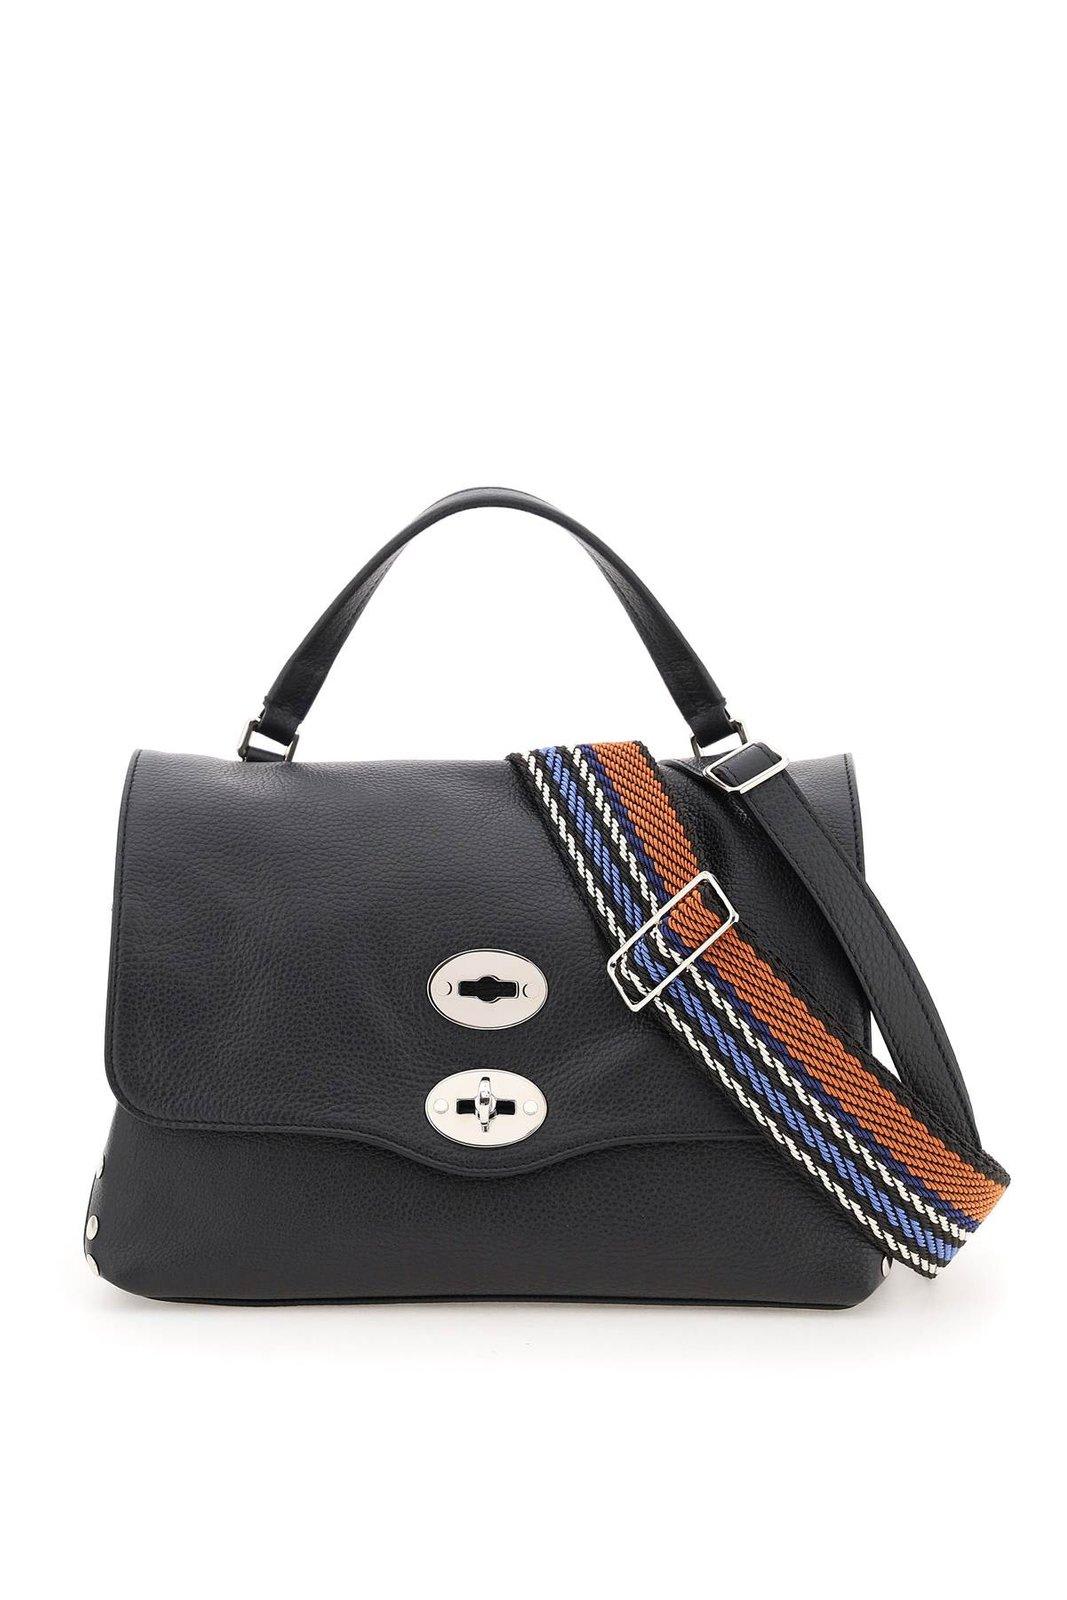 ZANELLATO - Postina S Daily Leather Handbag